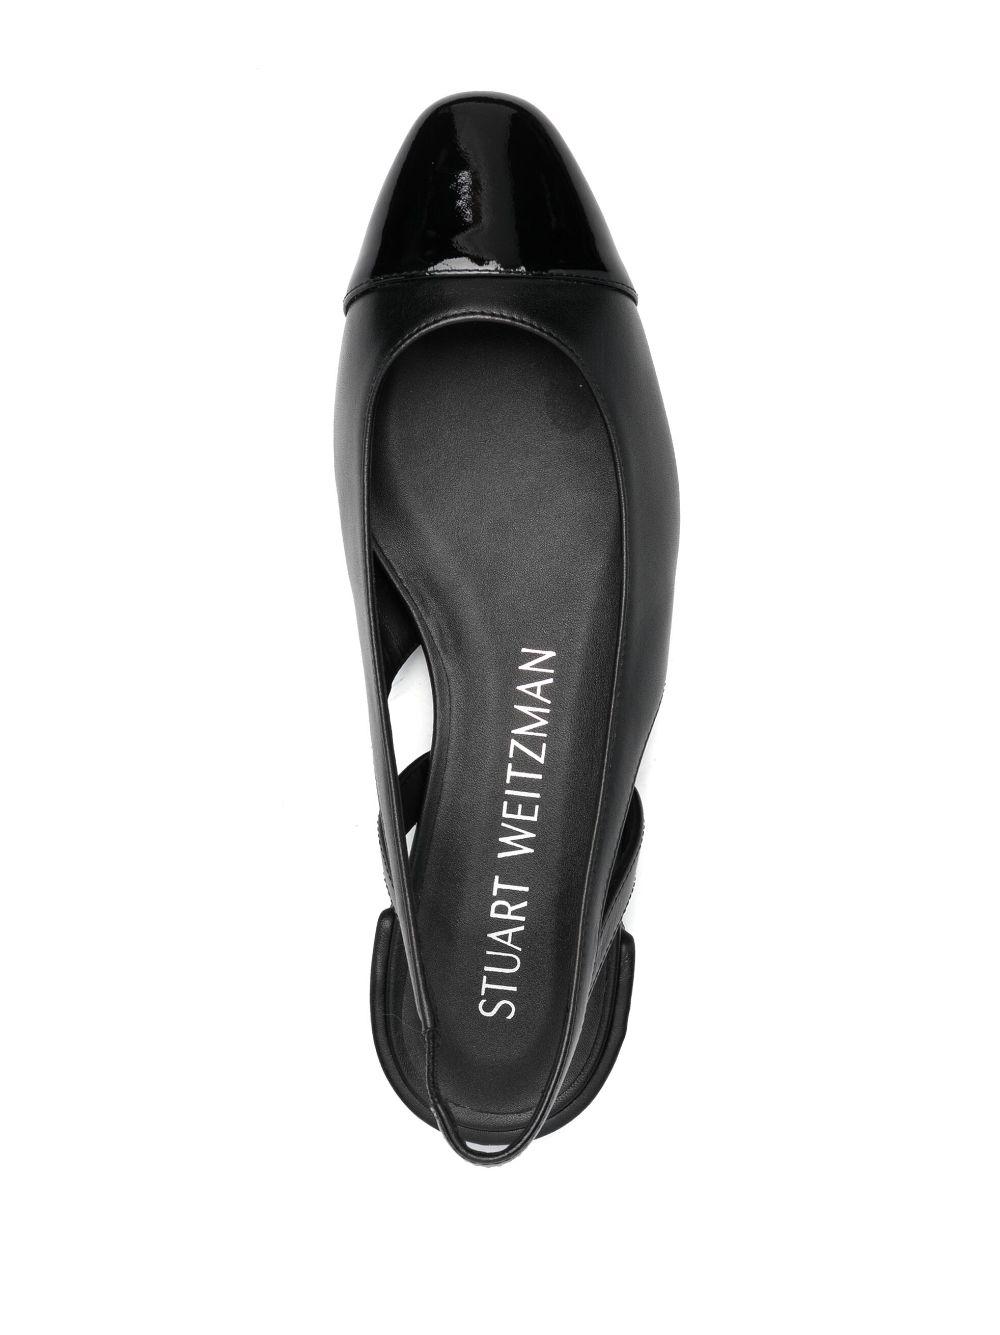 Stuart Weitzman Cut-Out Slingback Ballerina Shoes - Black